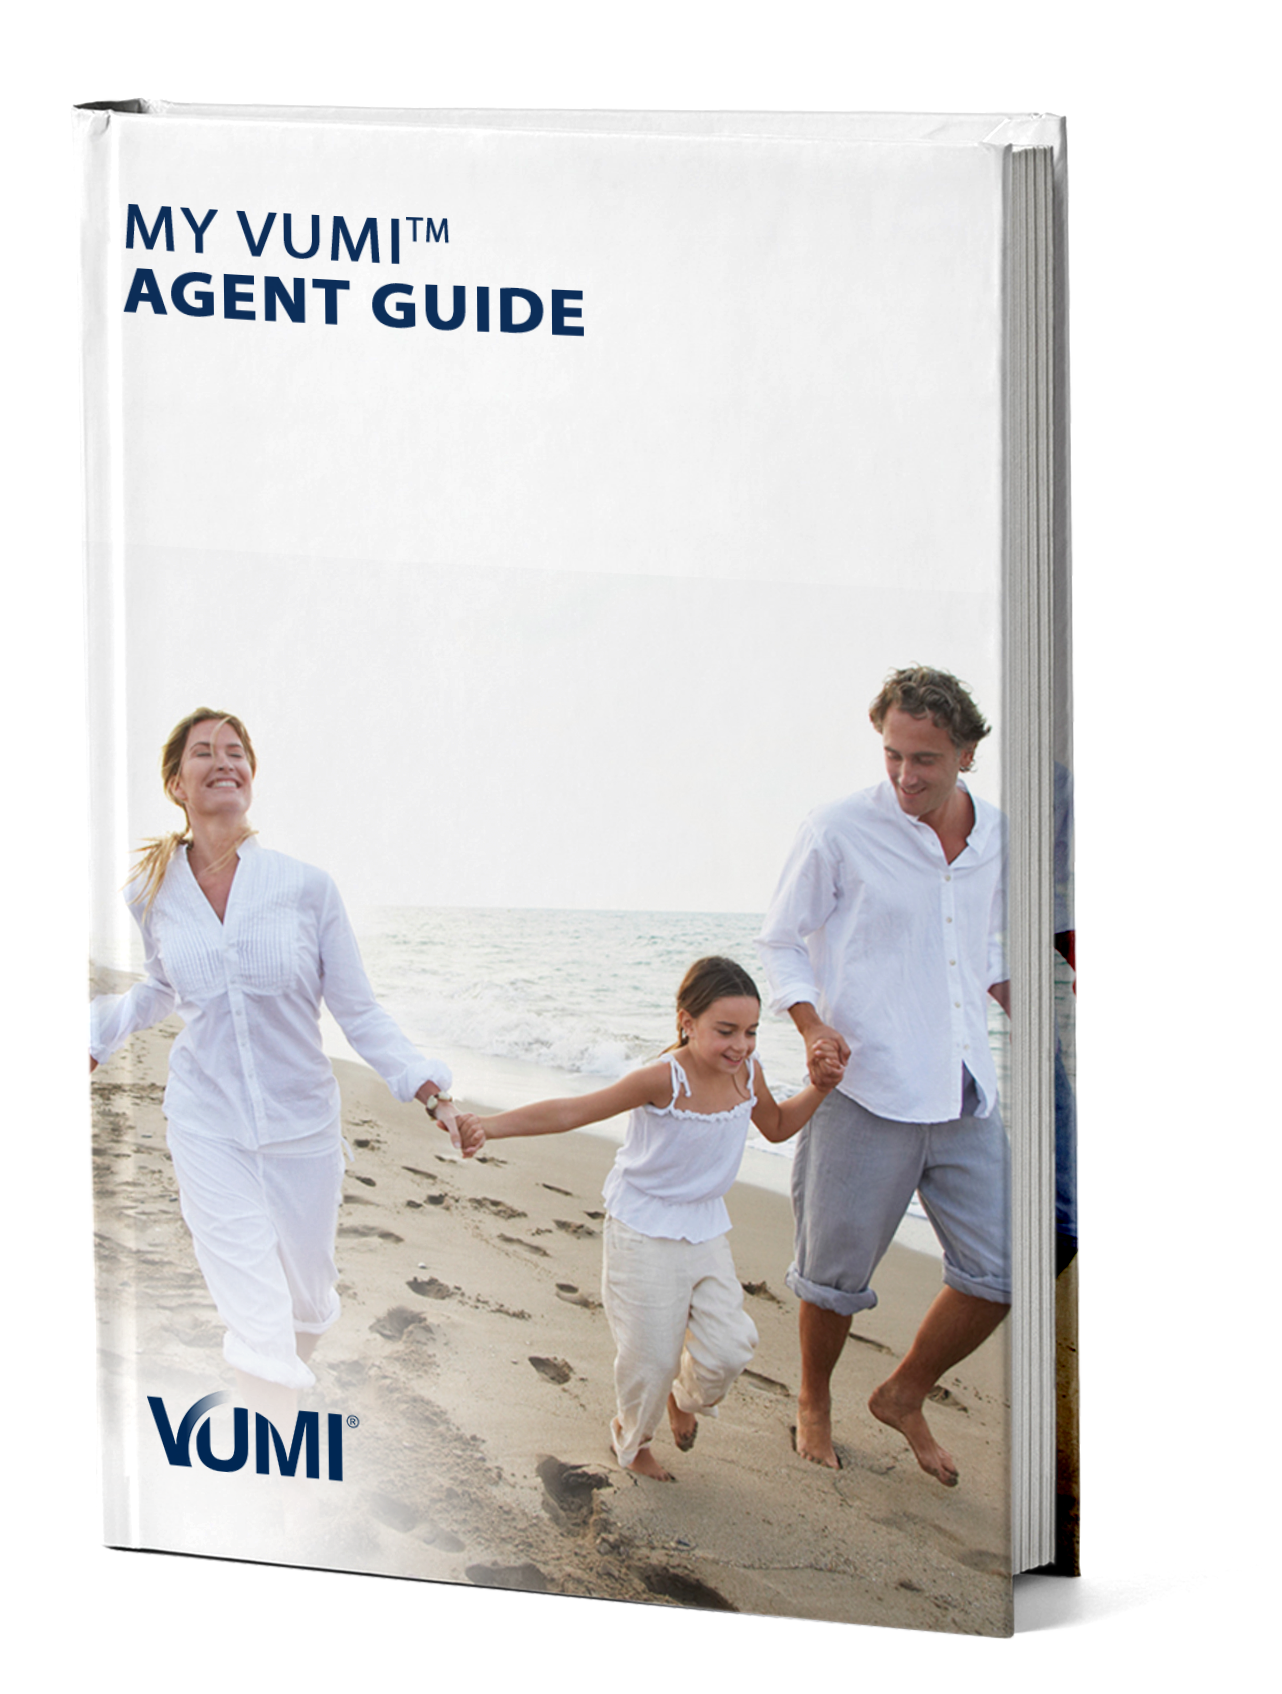 My VUMI agent guide